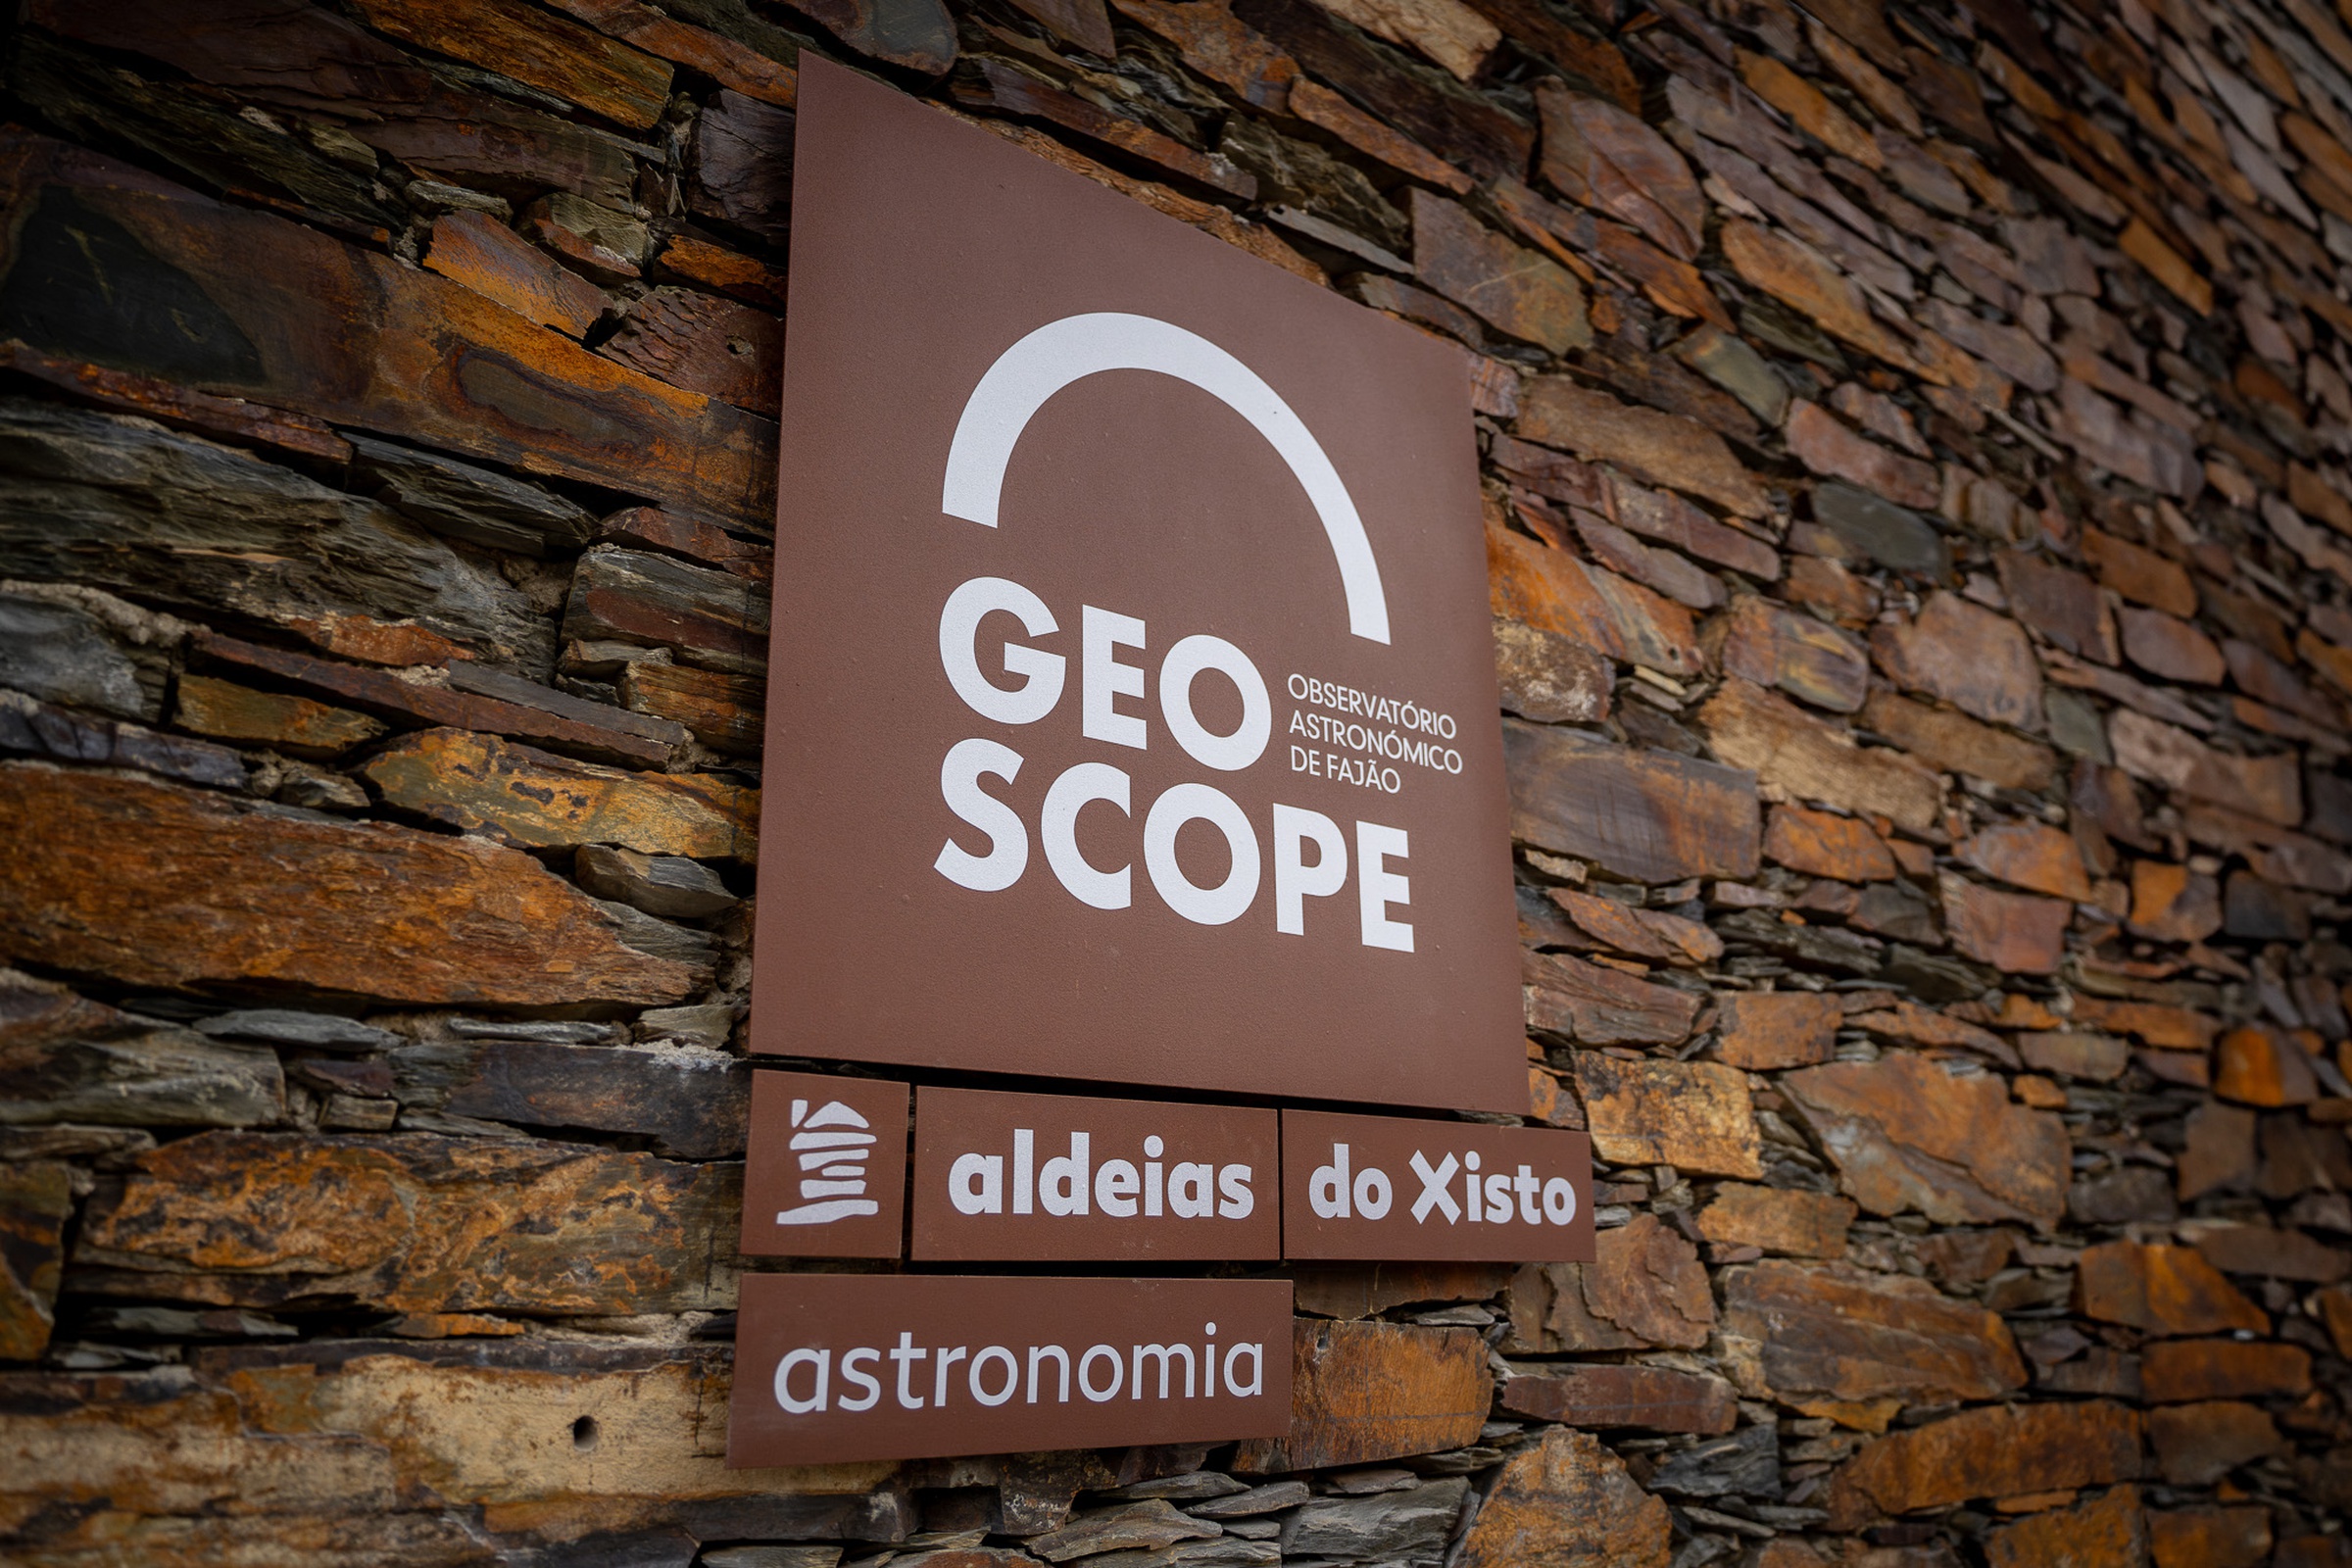 How to visit the Fajão Geoscope